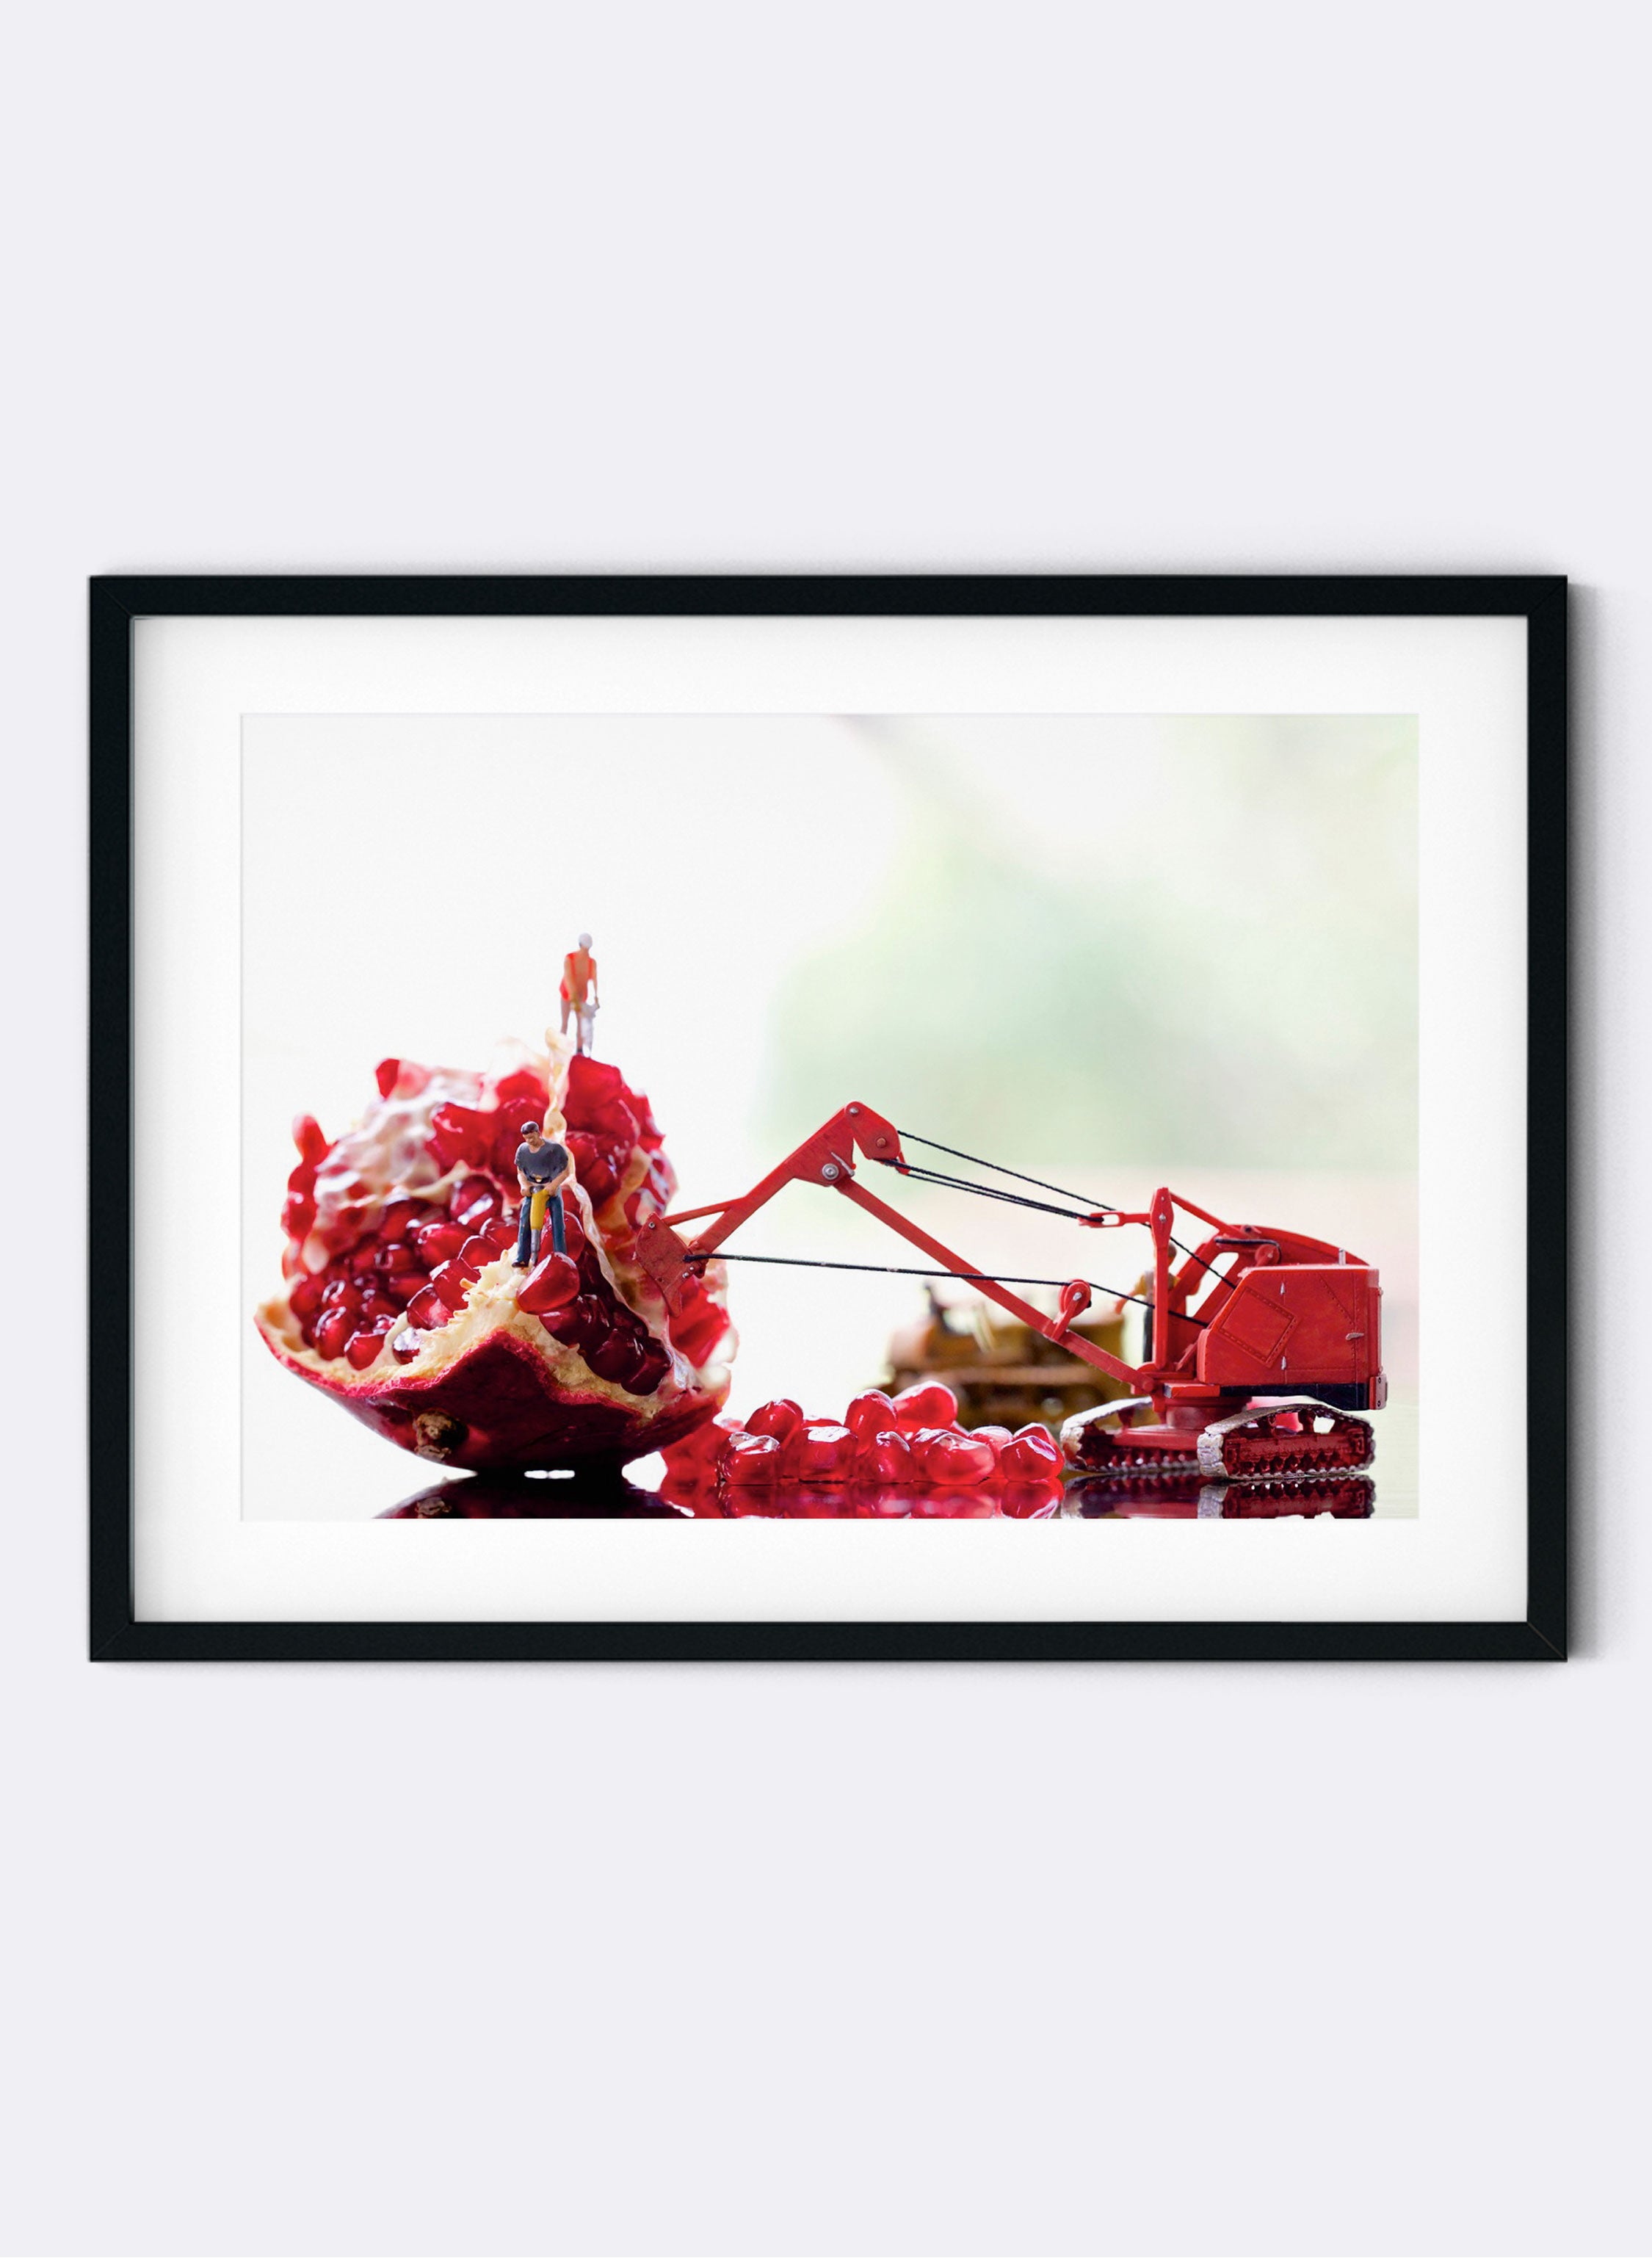 Pomegranate Harvest - Photographic Print